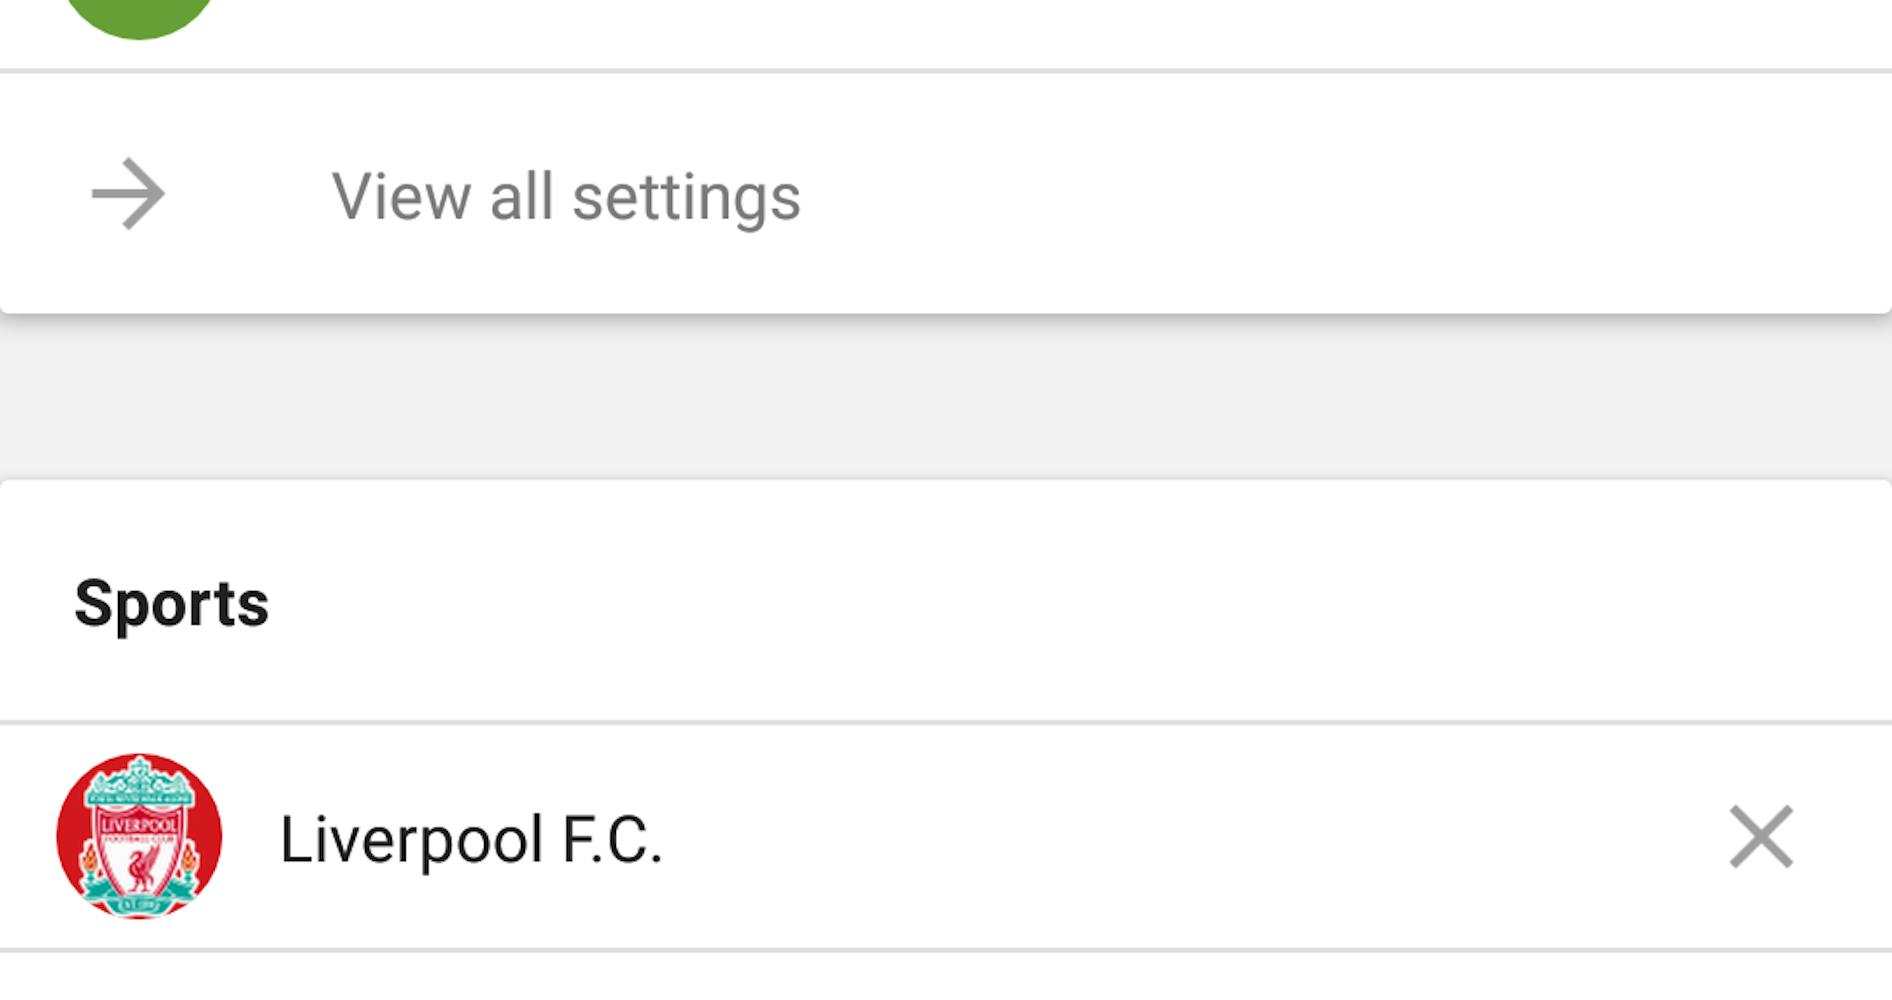 Google feed custom settings